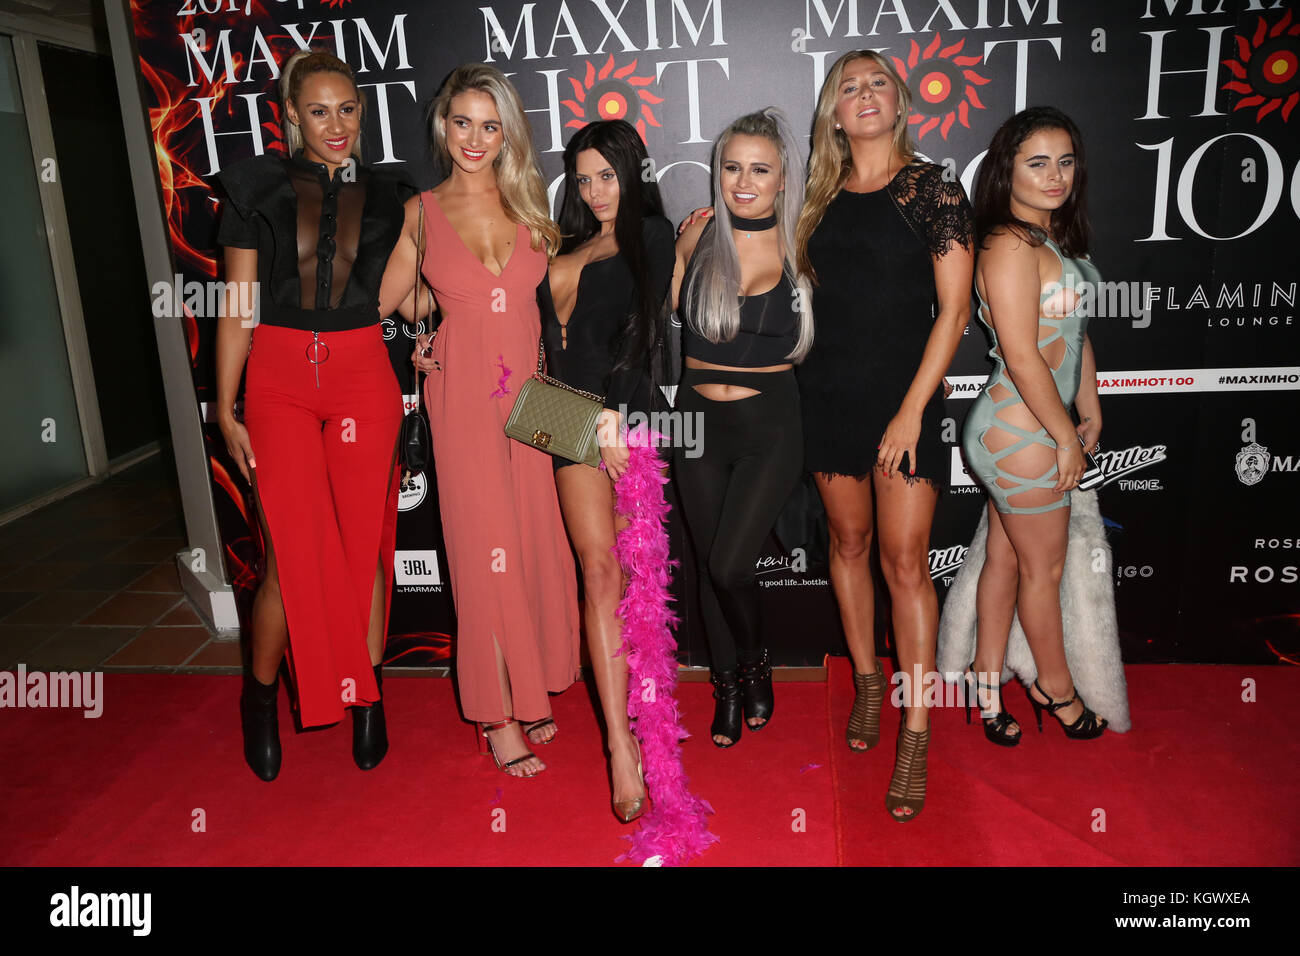 VIPs an der Maxim Hot 100 Party in der Flamingo Lounge, Potts Point, Sydney, Australien. Stockfoto